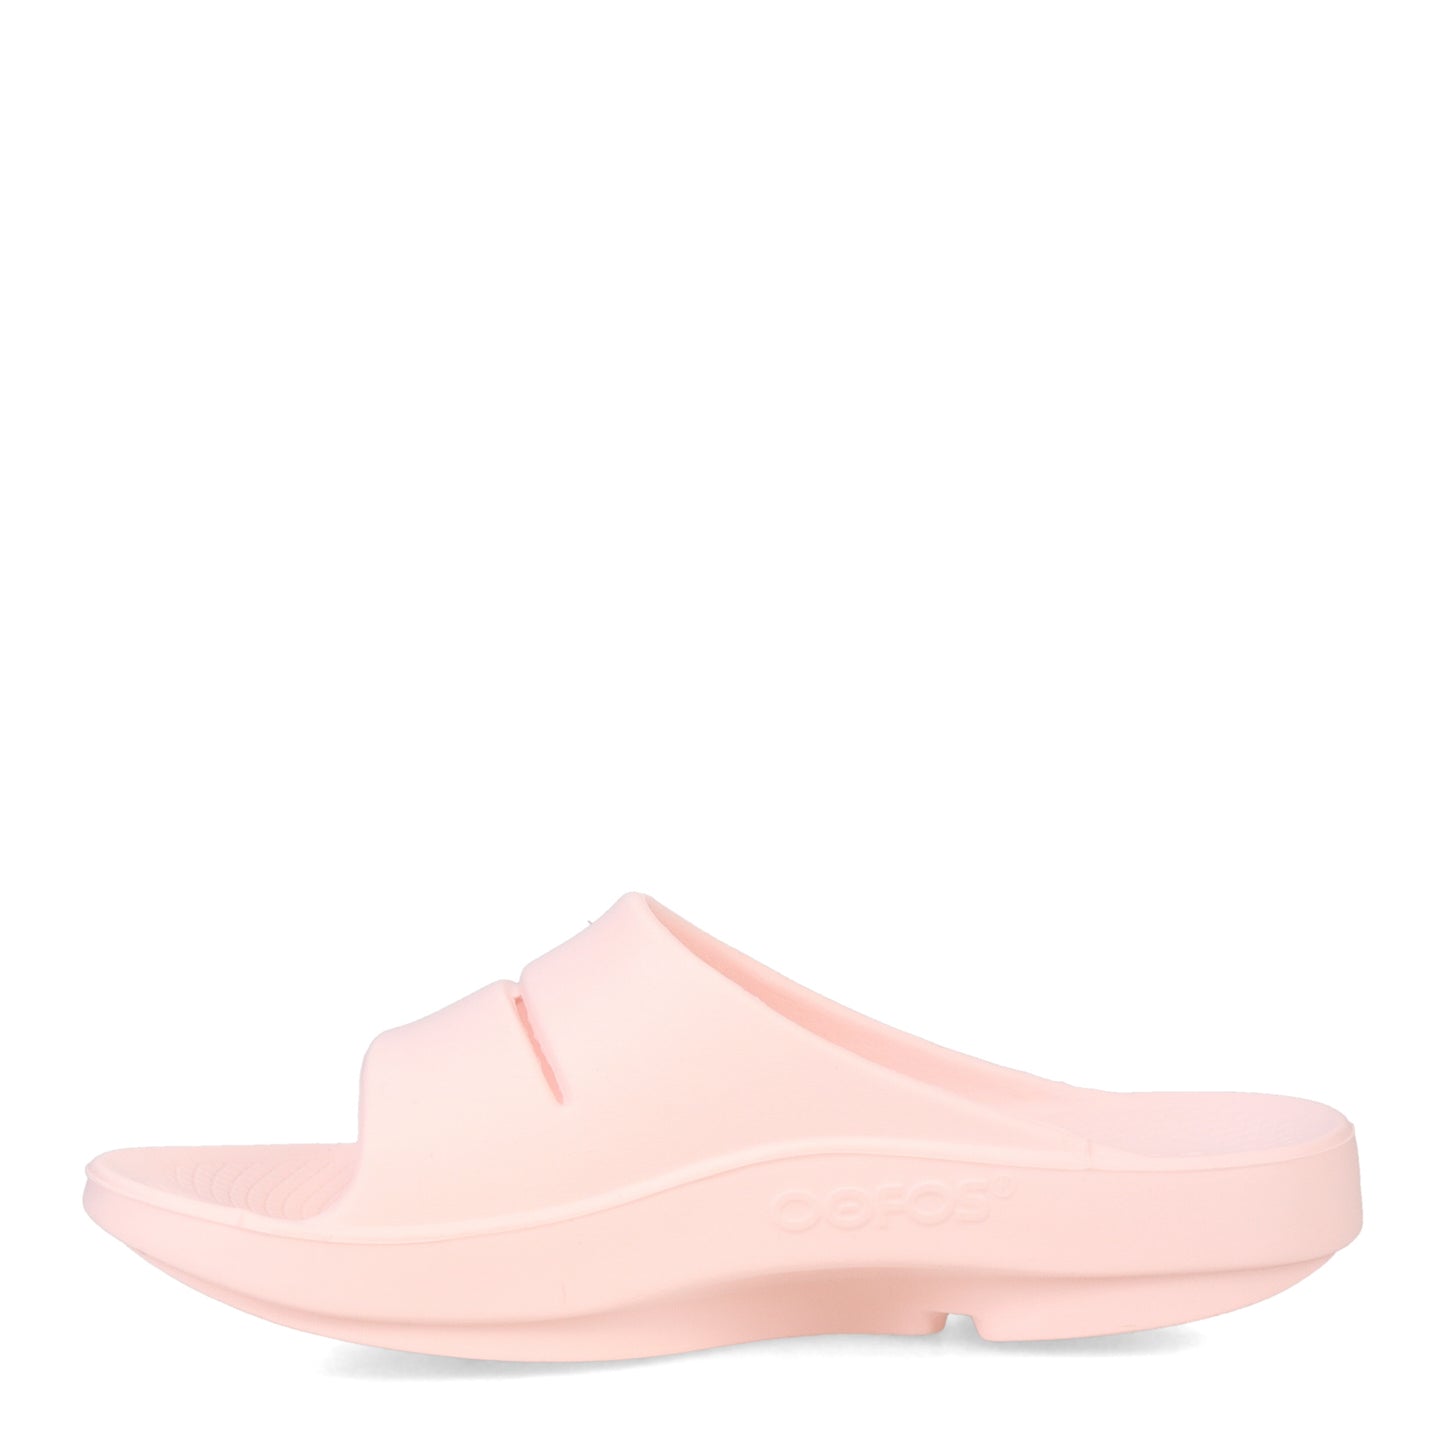 Peltz Shoes  Women's Oofos OOahh Slide Sandal Blush 1100-BLUSH